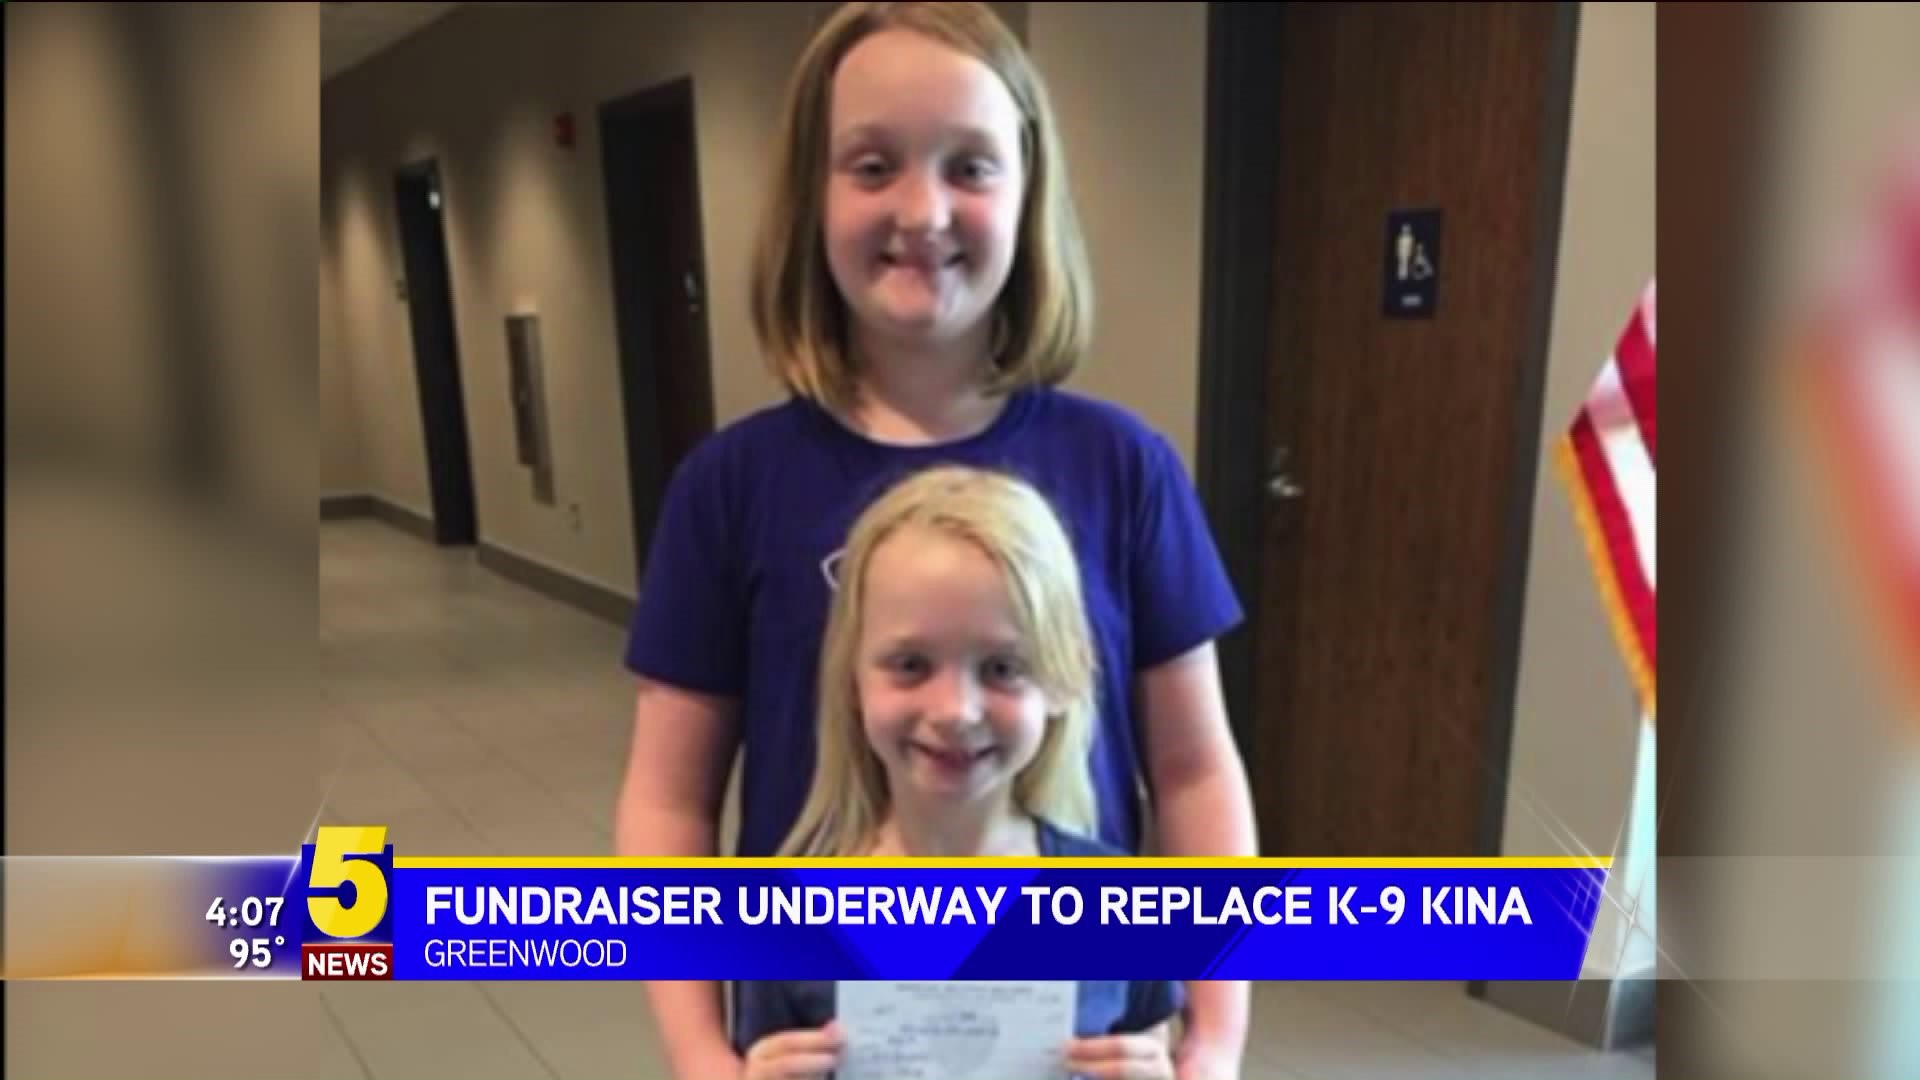 Fundraiser Underway To Purchase New Greenwood K-9 Officer